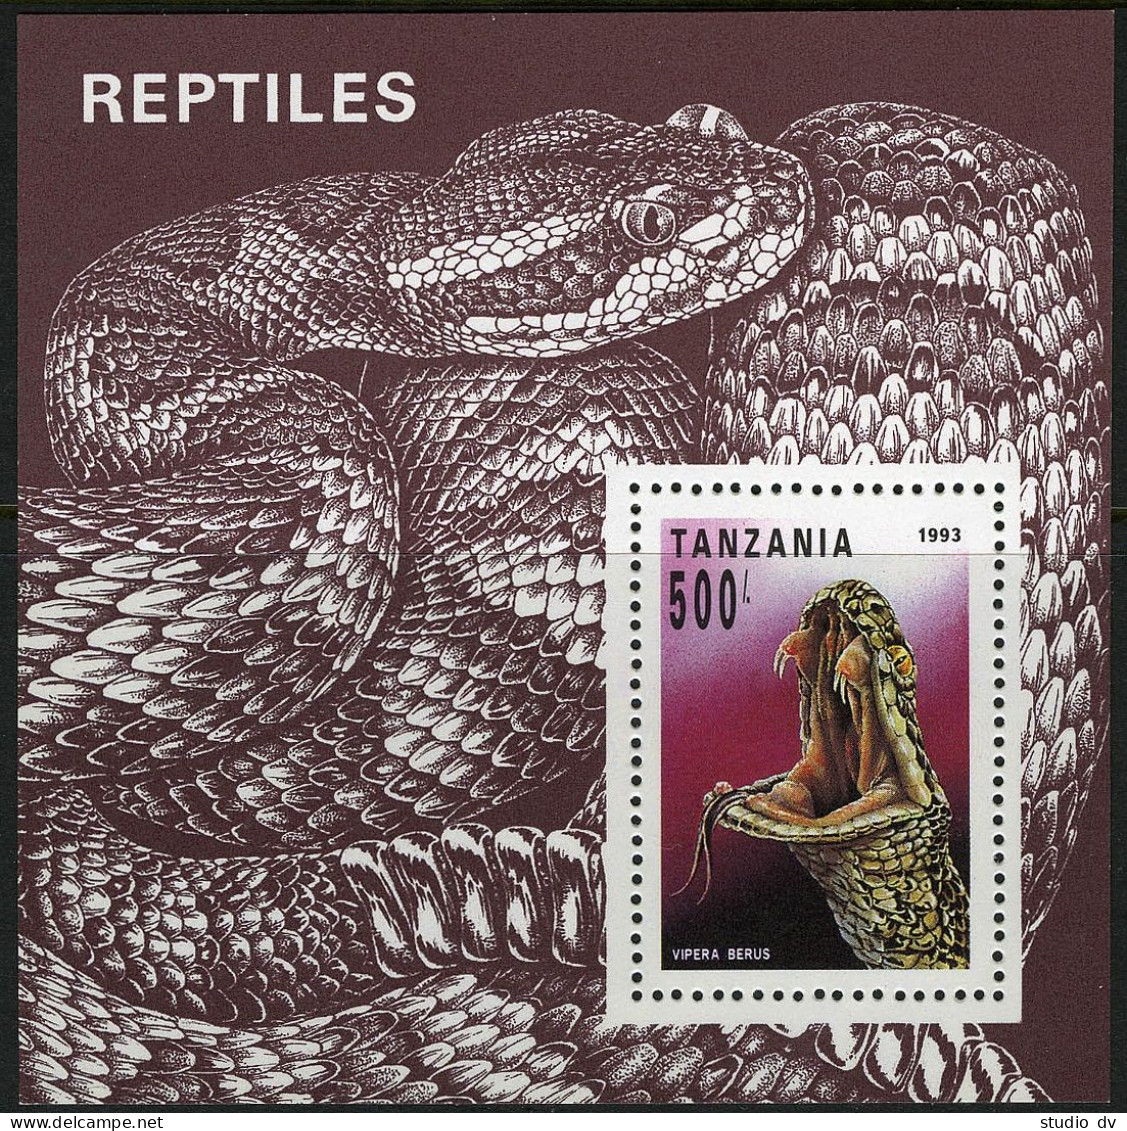 Tanzania 1128-1135,lightly Hinged.Reptiles:Lizard,Iguana,Snakes,Turtle,Alligator - Tanzania (1964-...)